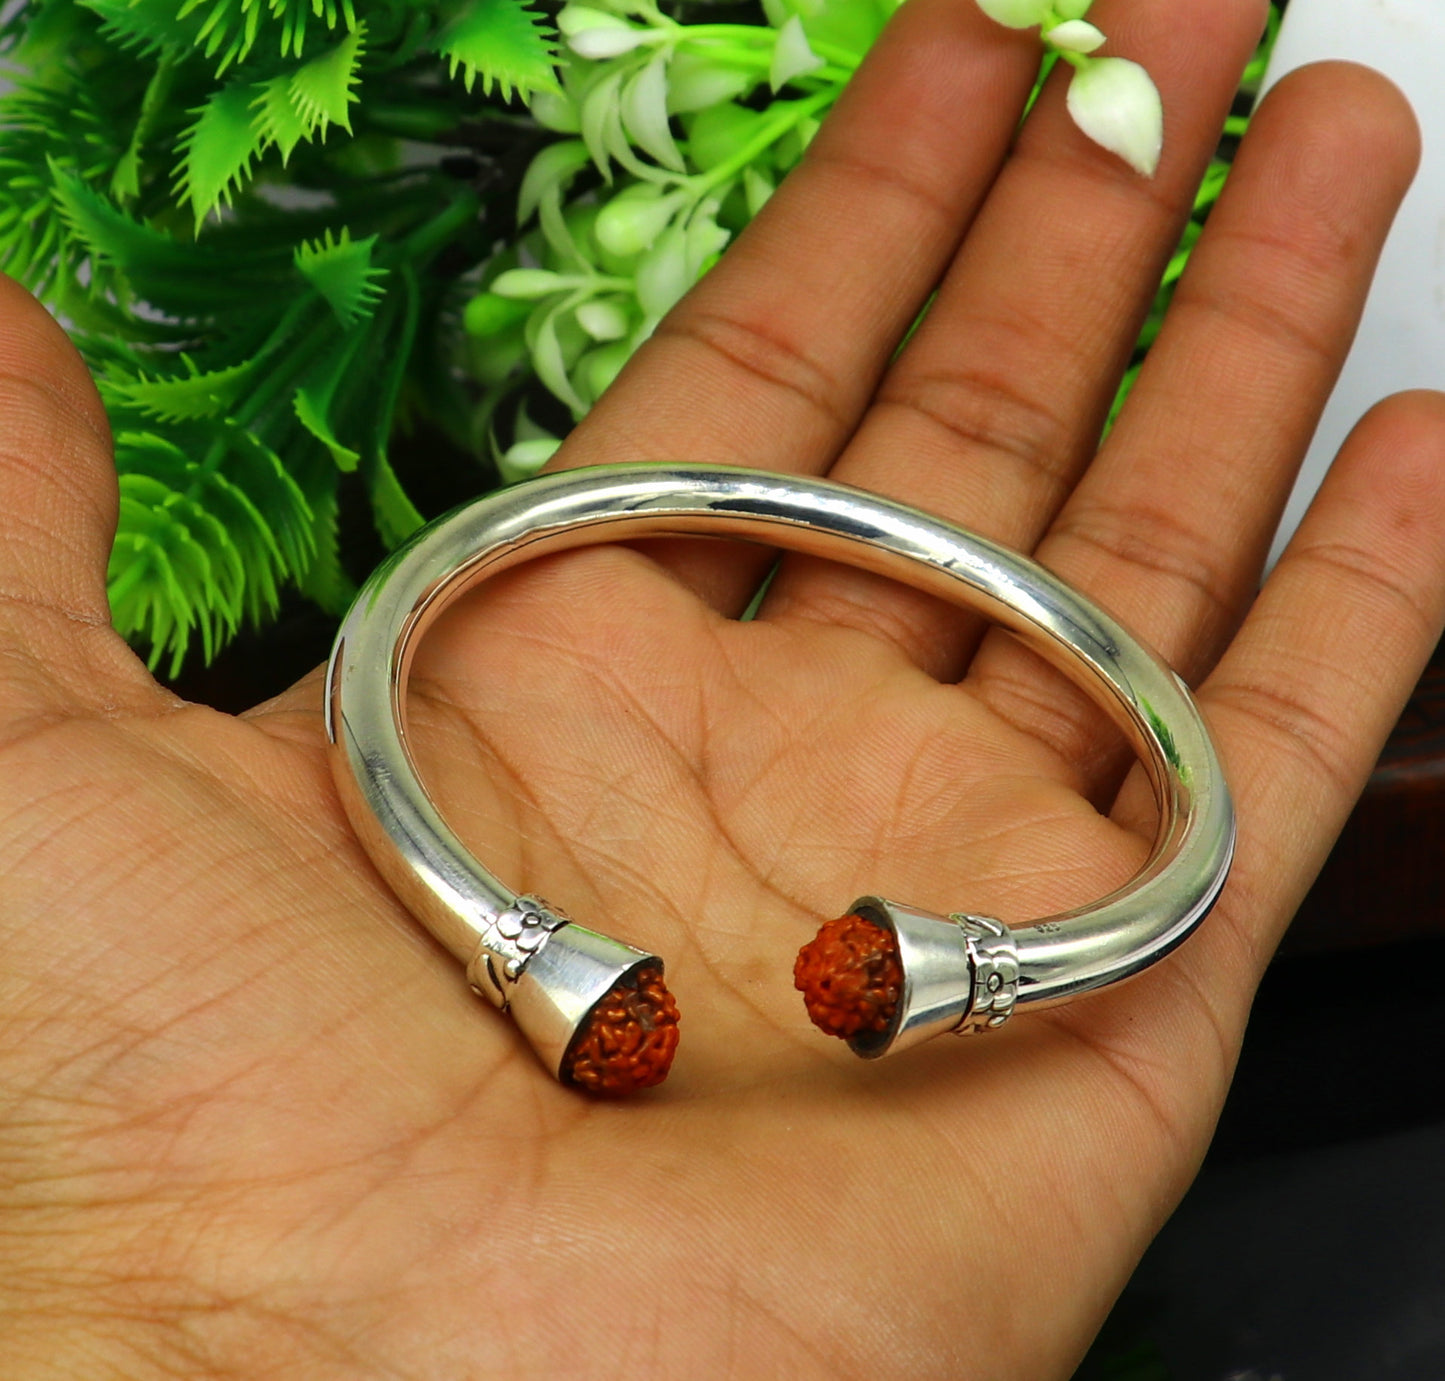 925 sterling silver handmade plain shiny fancy stylish bangle bracelet kada, elegant tribal rudraksha bangle unisex gifting jewelry nssk - TRIBAL ORNAMENTS